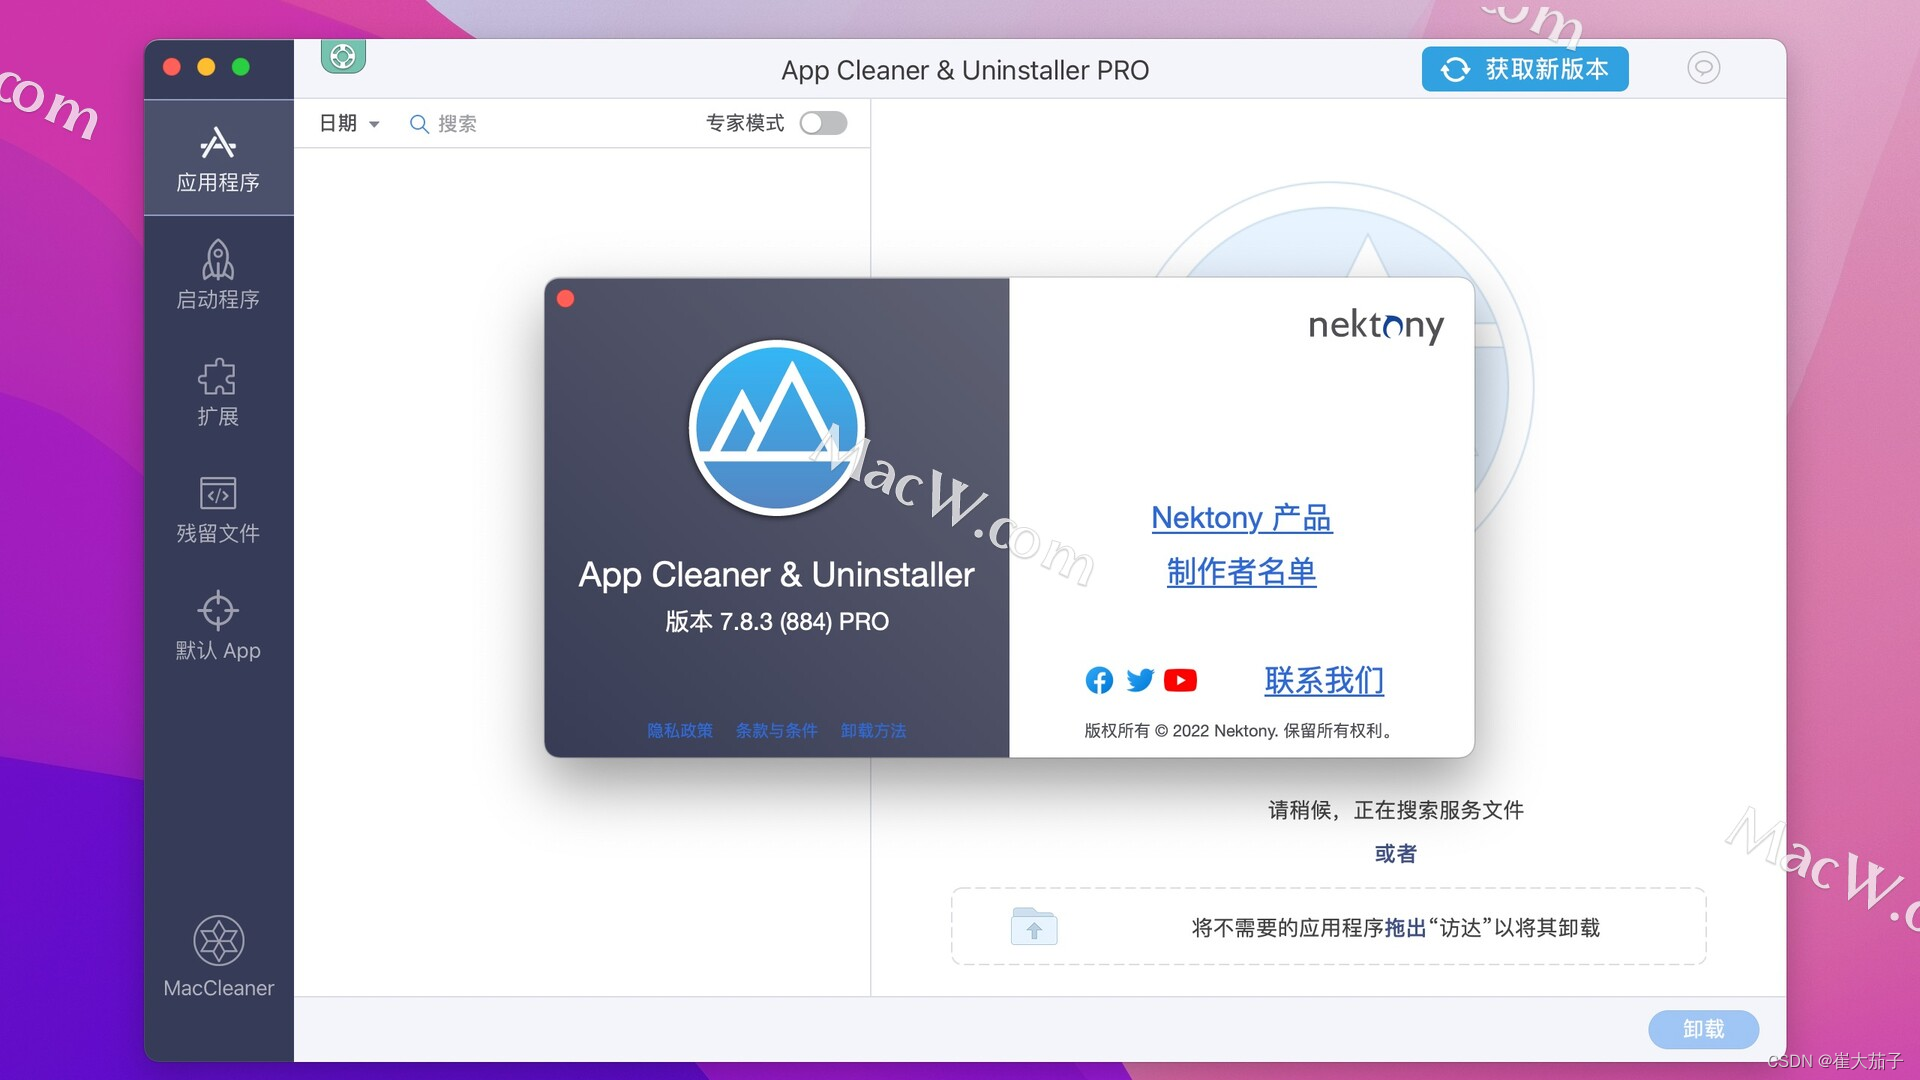 App Cleaner  Uninstaller Pro 一键清理，彻底卸载Mac应用